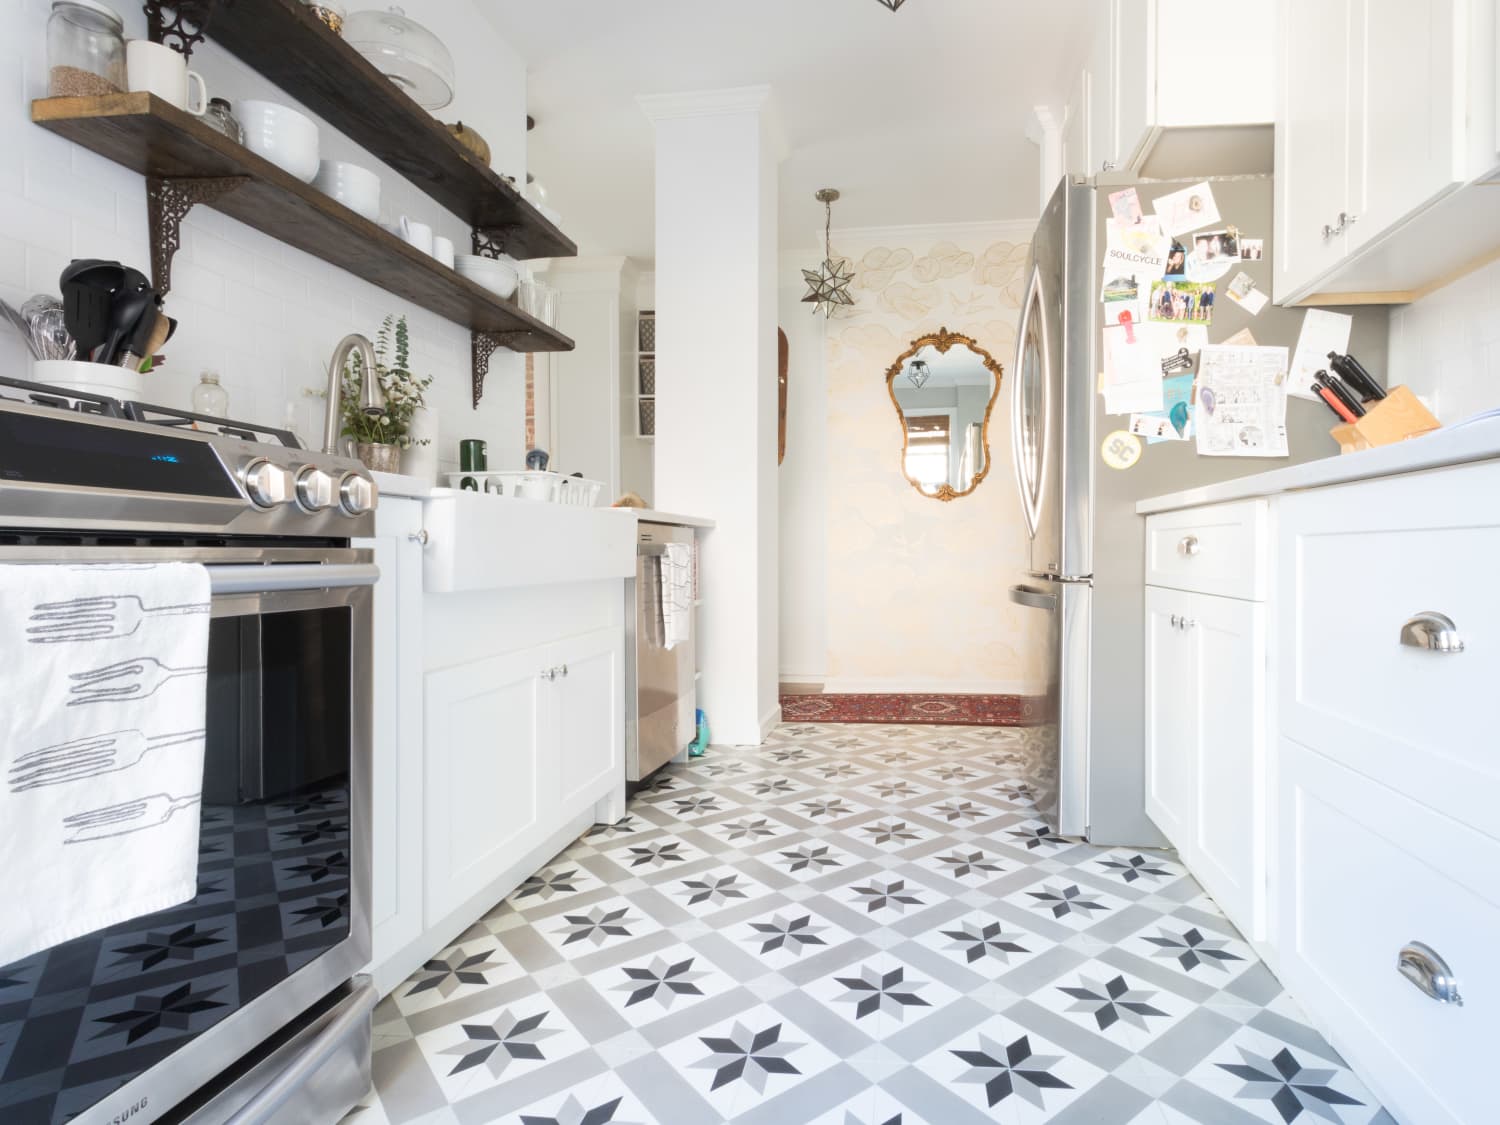 Gorgeous Ceramic Tile Kitchen Floor Design Ideas